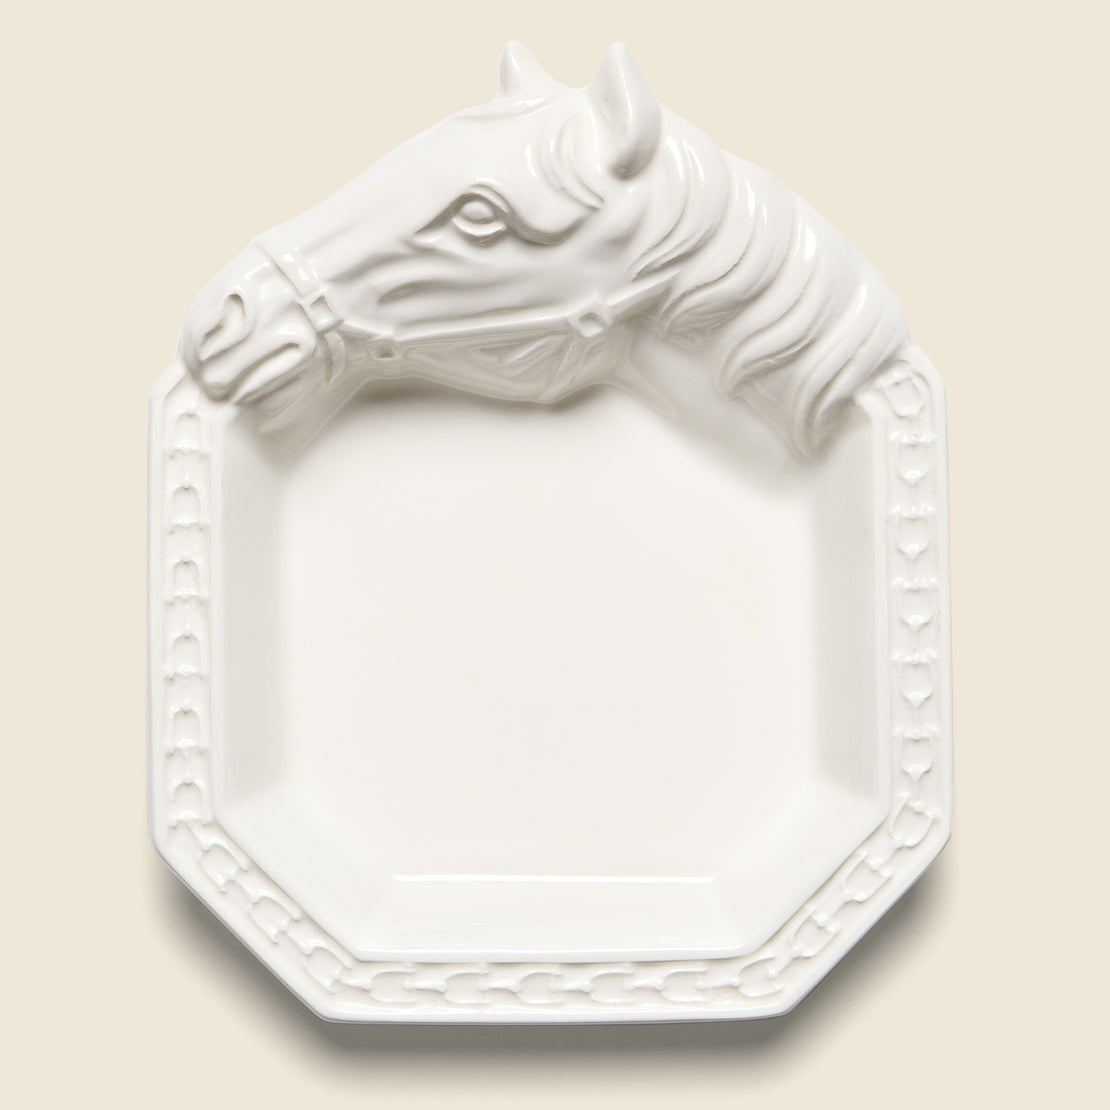 Vintage Porcelain Horse Catch All - White